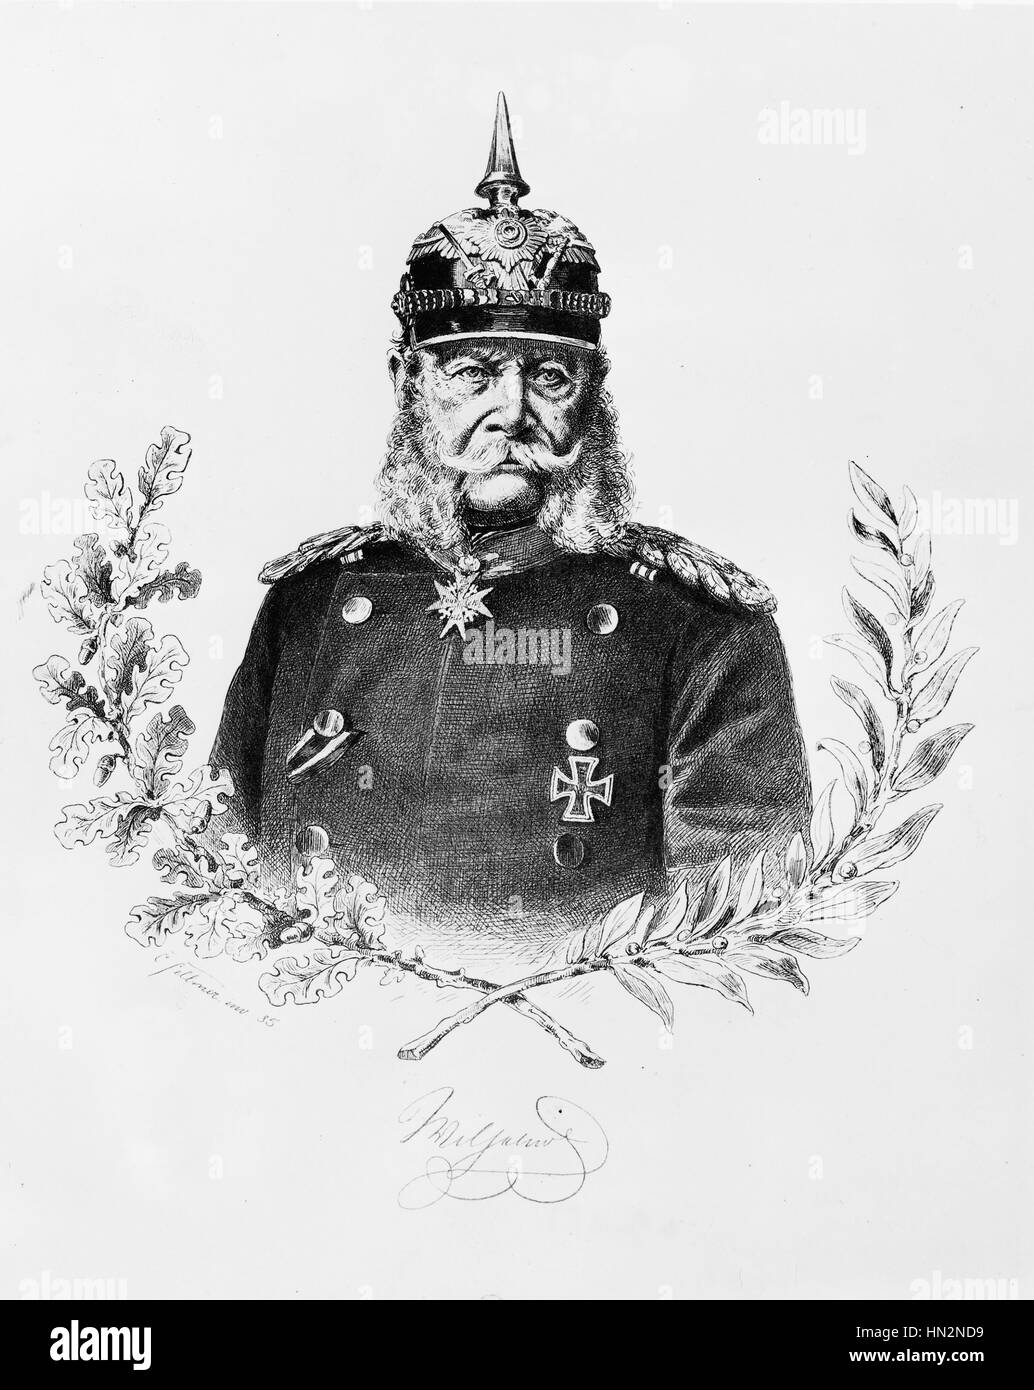 Kaiser Wilhelm II by Gellmer 20th century Germany Stock Photo